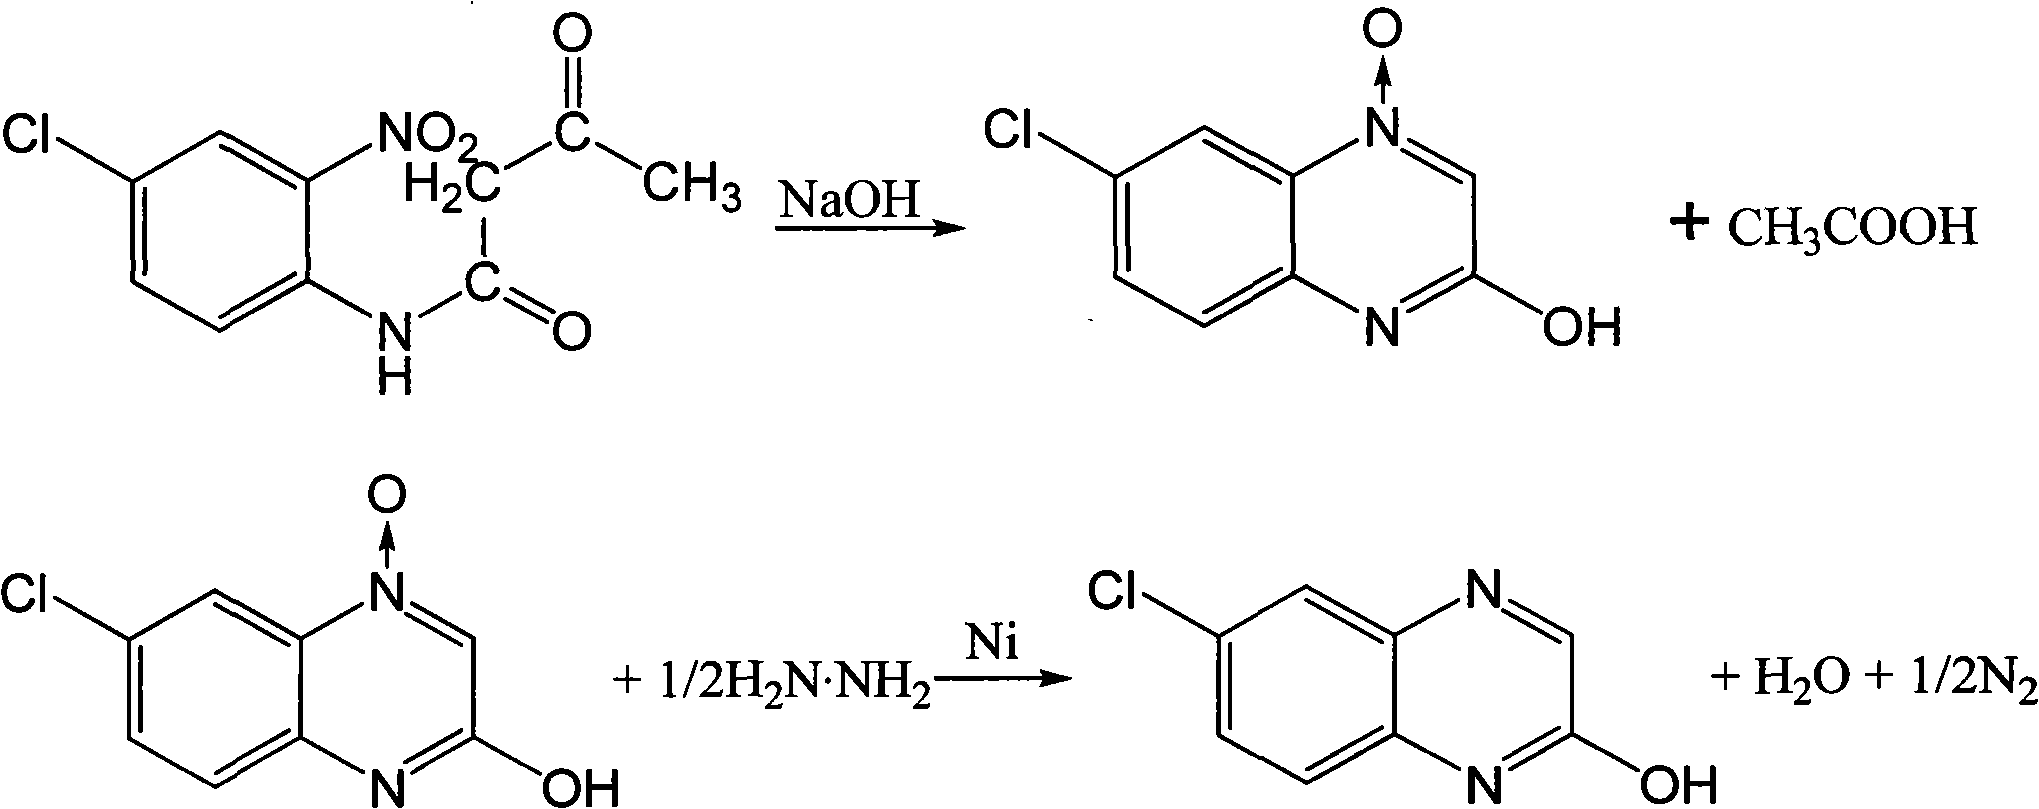 New preparation process of 6-chloro-2-hydroxyquinoxaline